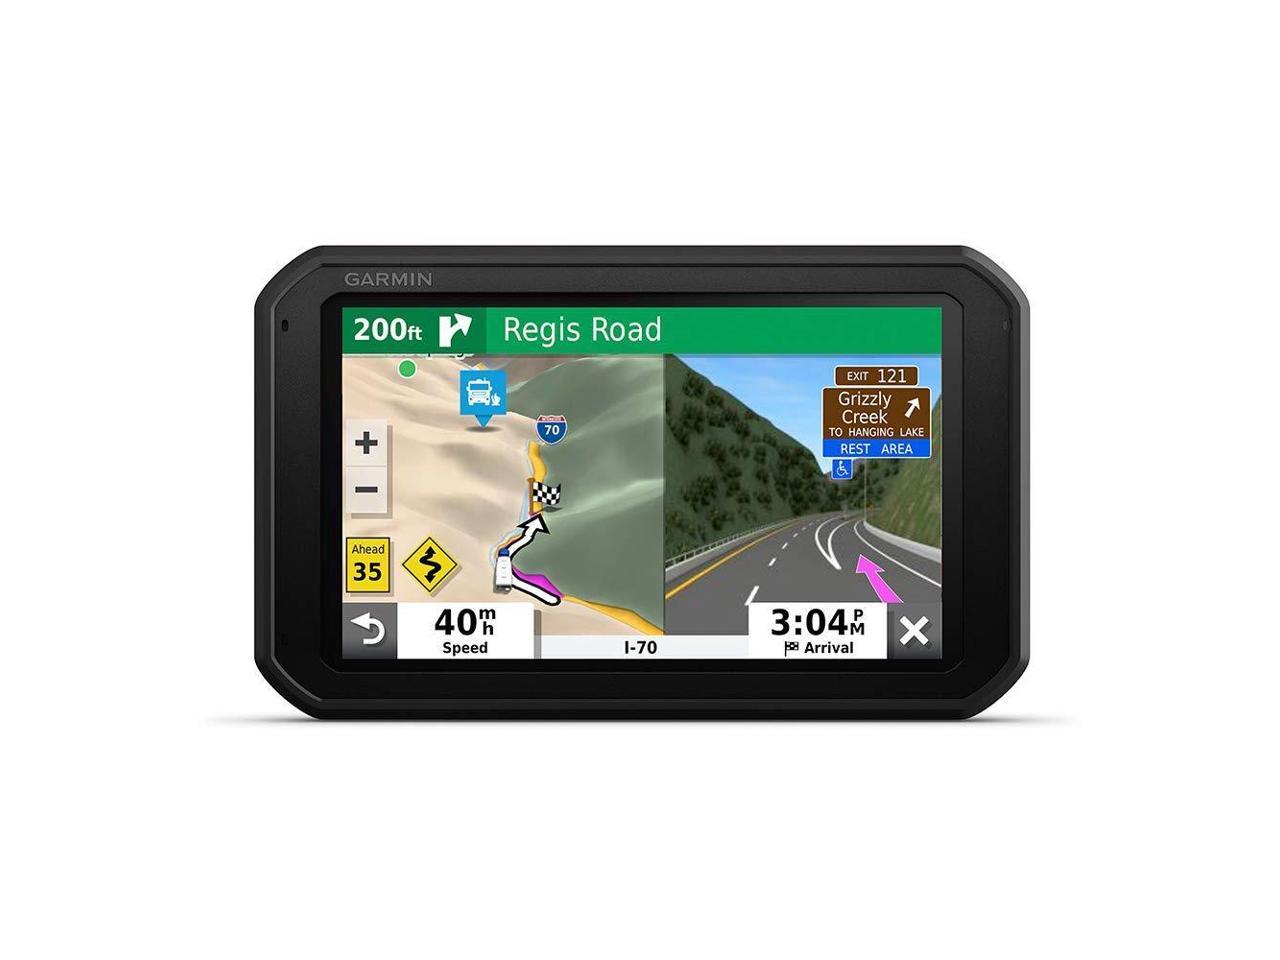 Garmin RV 785 & Traffic, Advanced GPS Navigator for RVs with Built-in Garmin Rv 785 Gps Navigator With Built-in Dash Cam